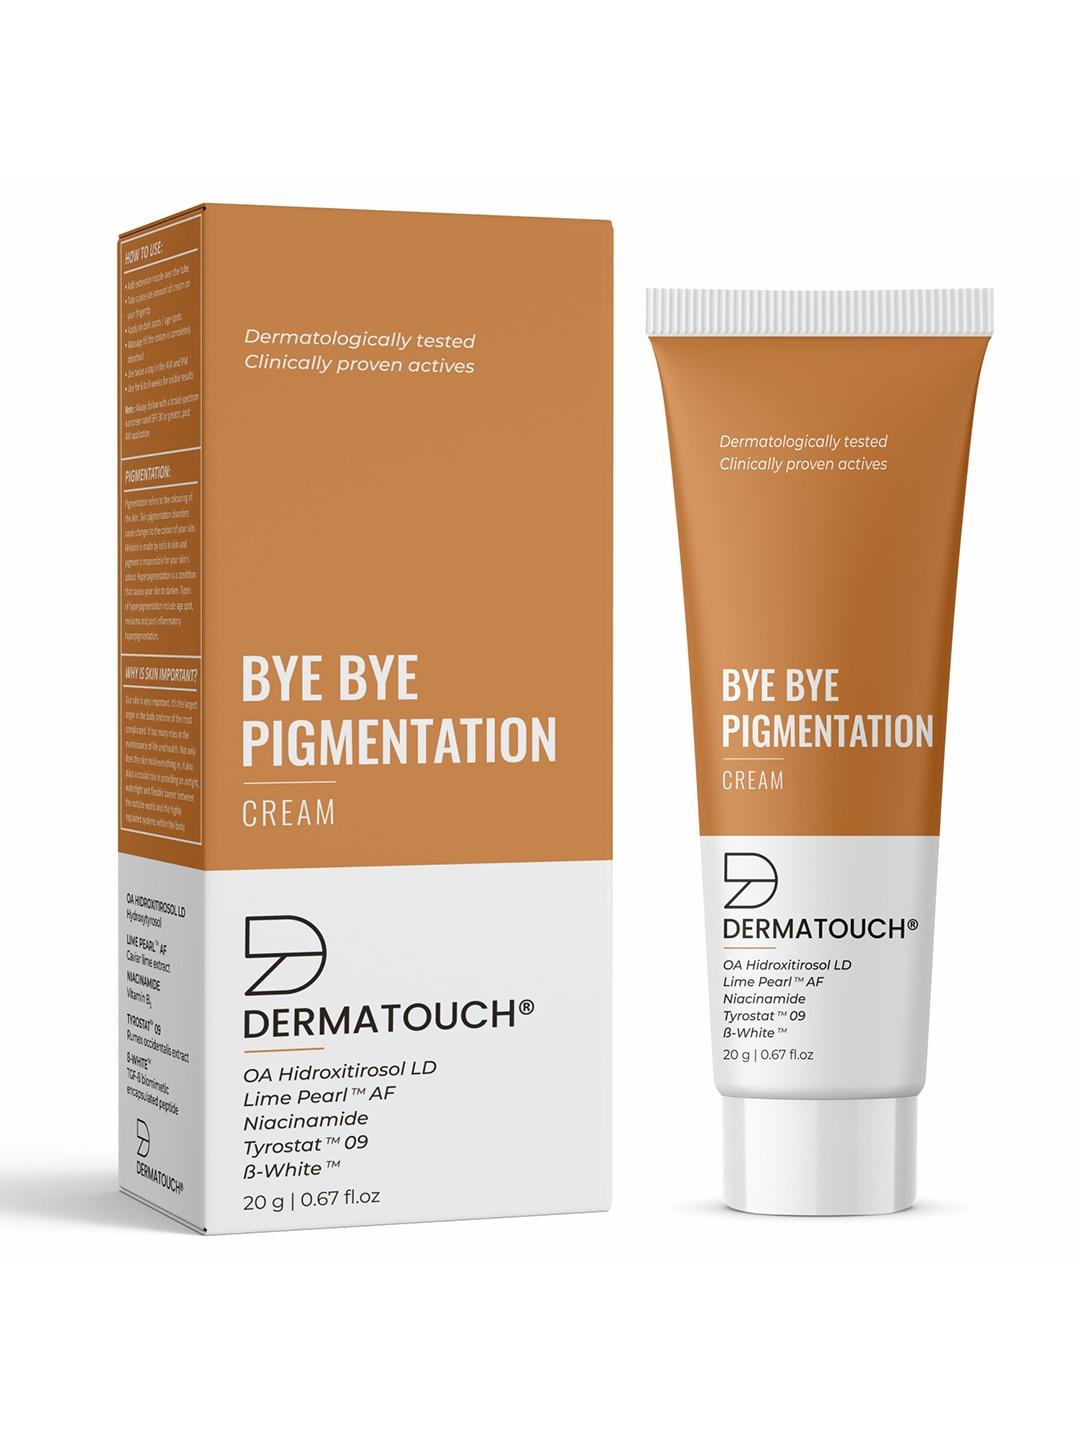 Dermatouch Bye Bye Pigmentation Cream - 20 g